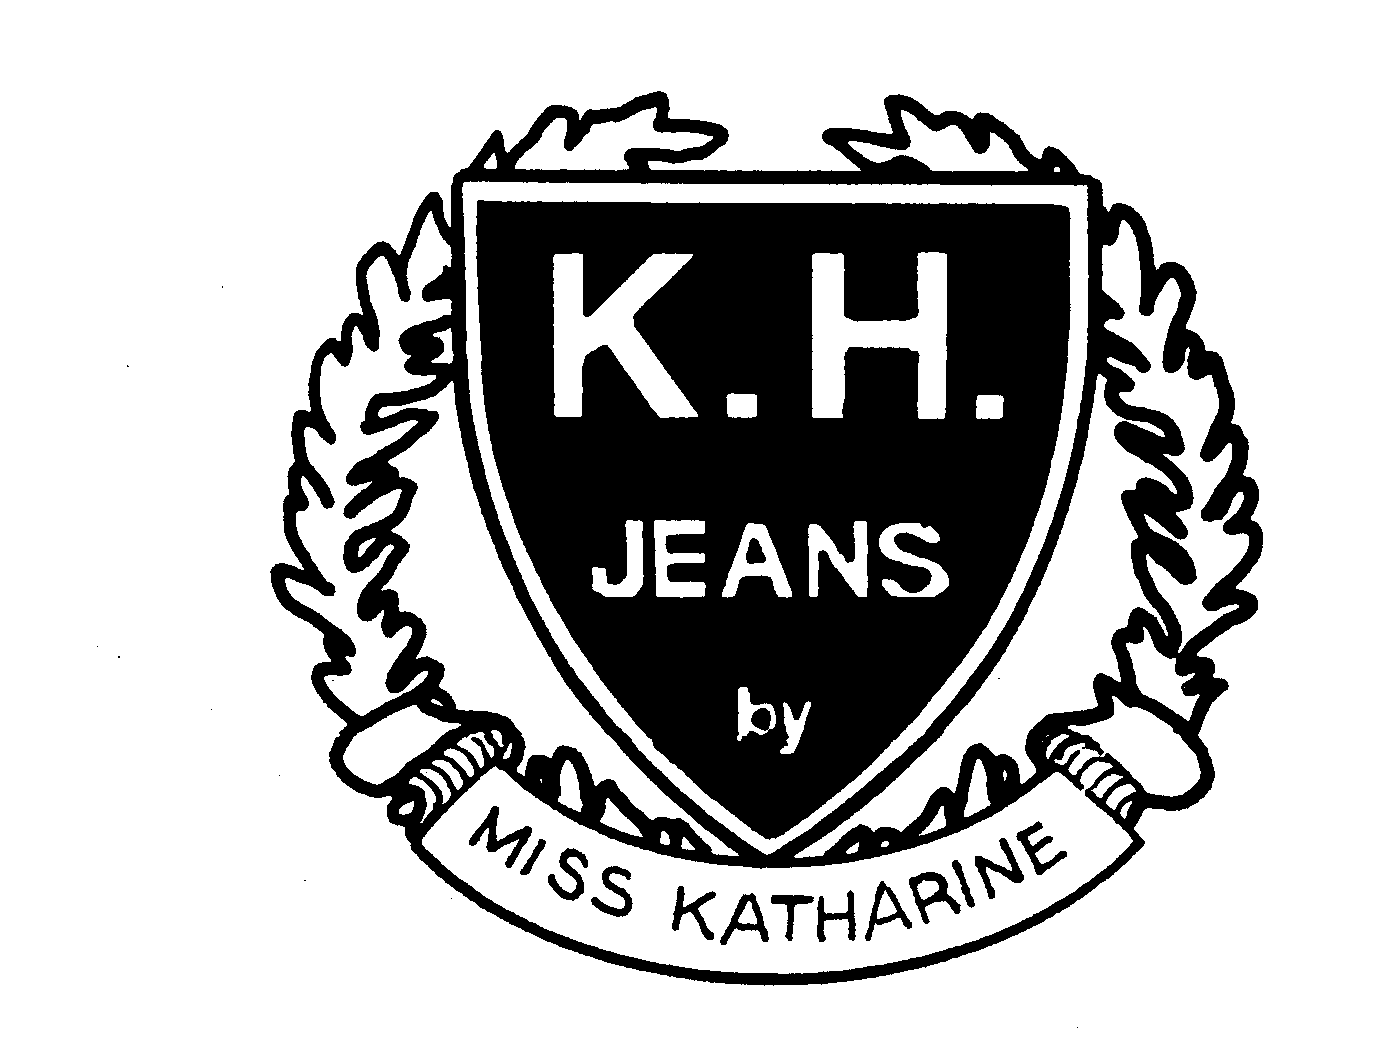  K.H. JEANS BY MISS KATHERINE